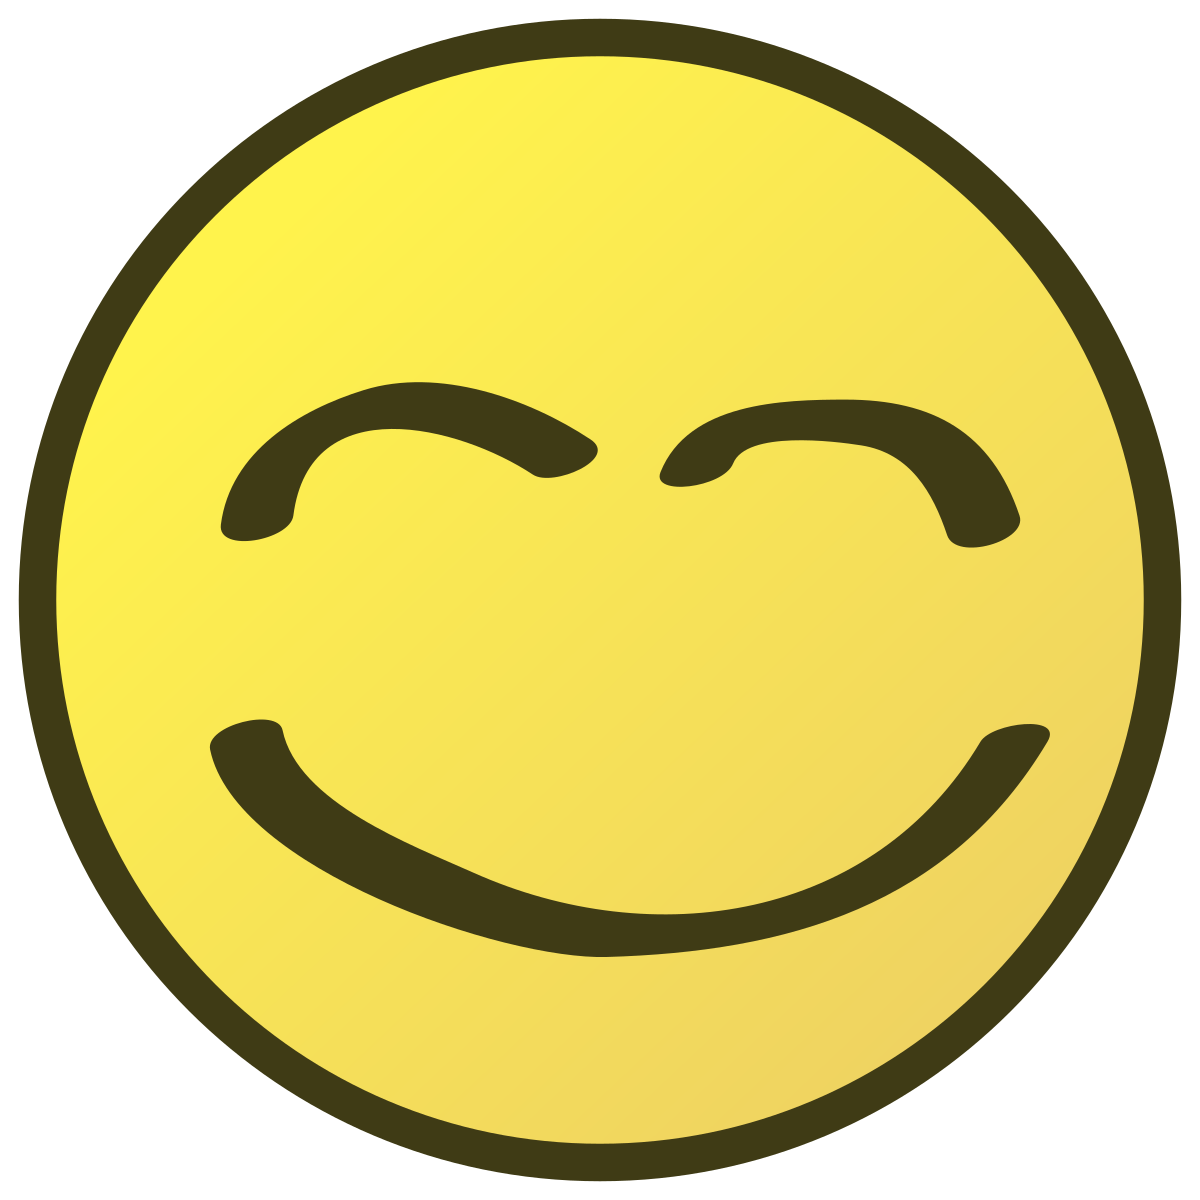 Download File:Sert - happy smile.svg - Wikipedia